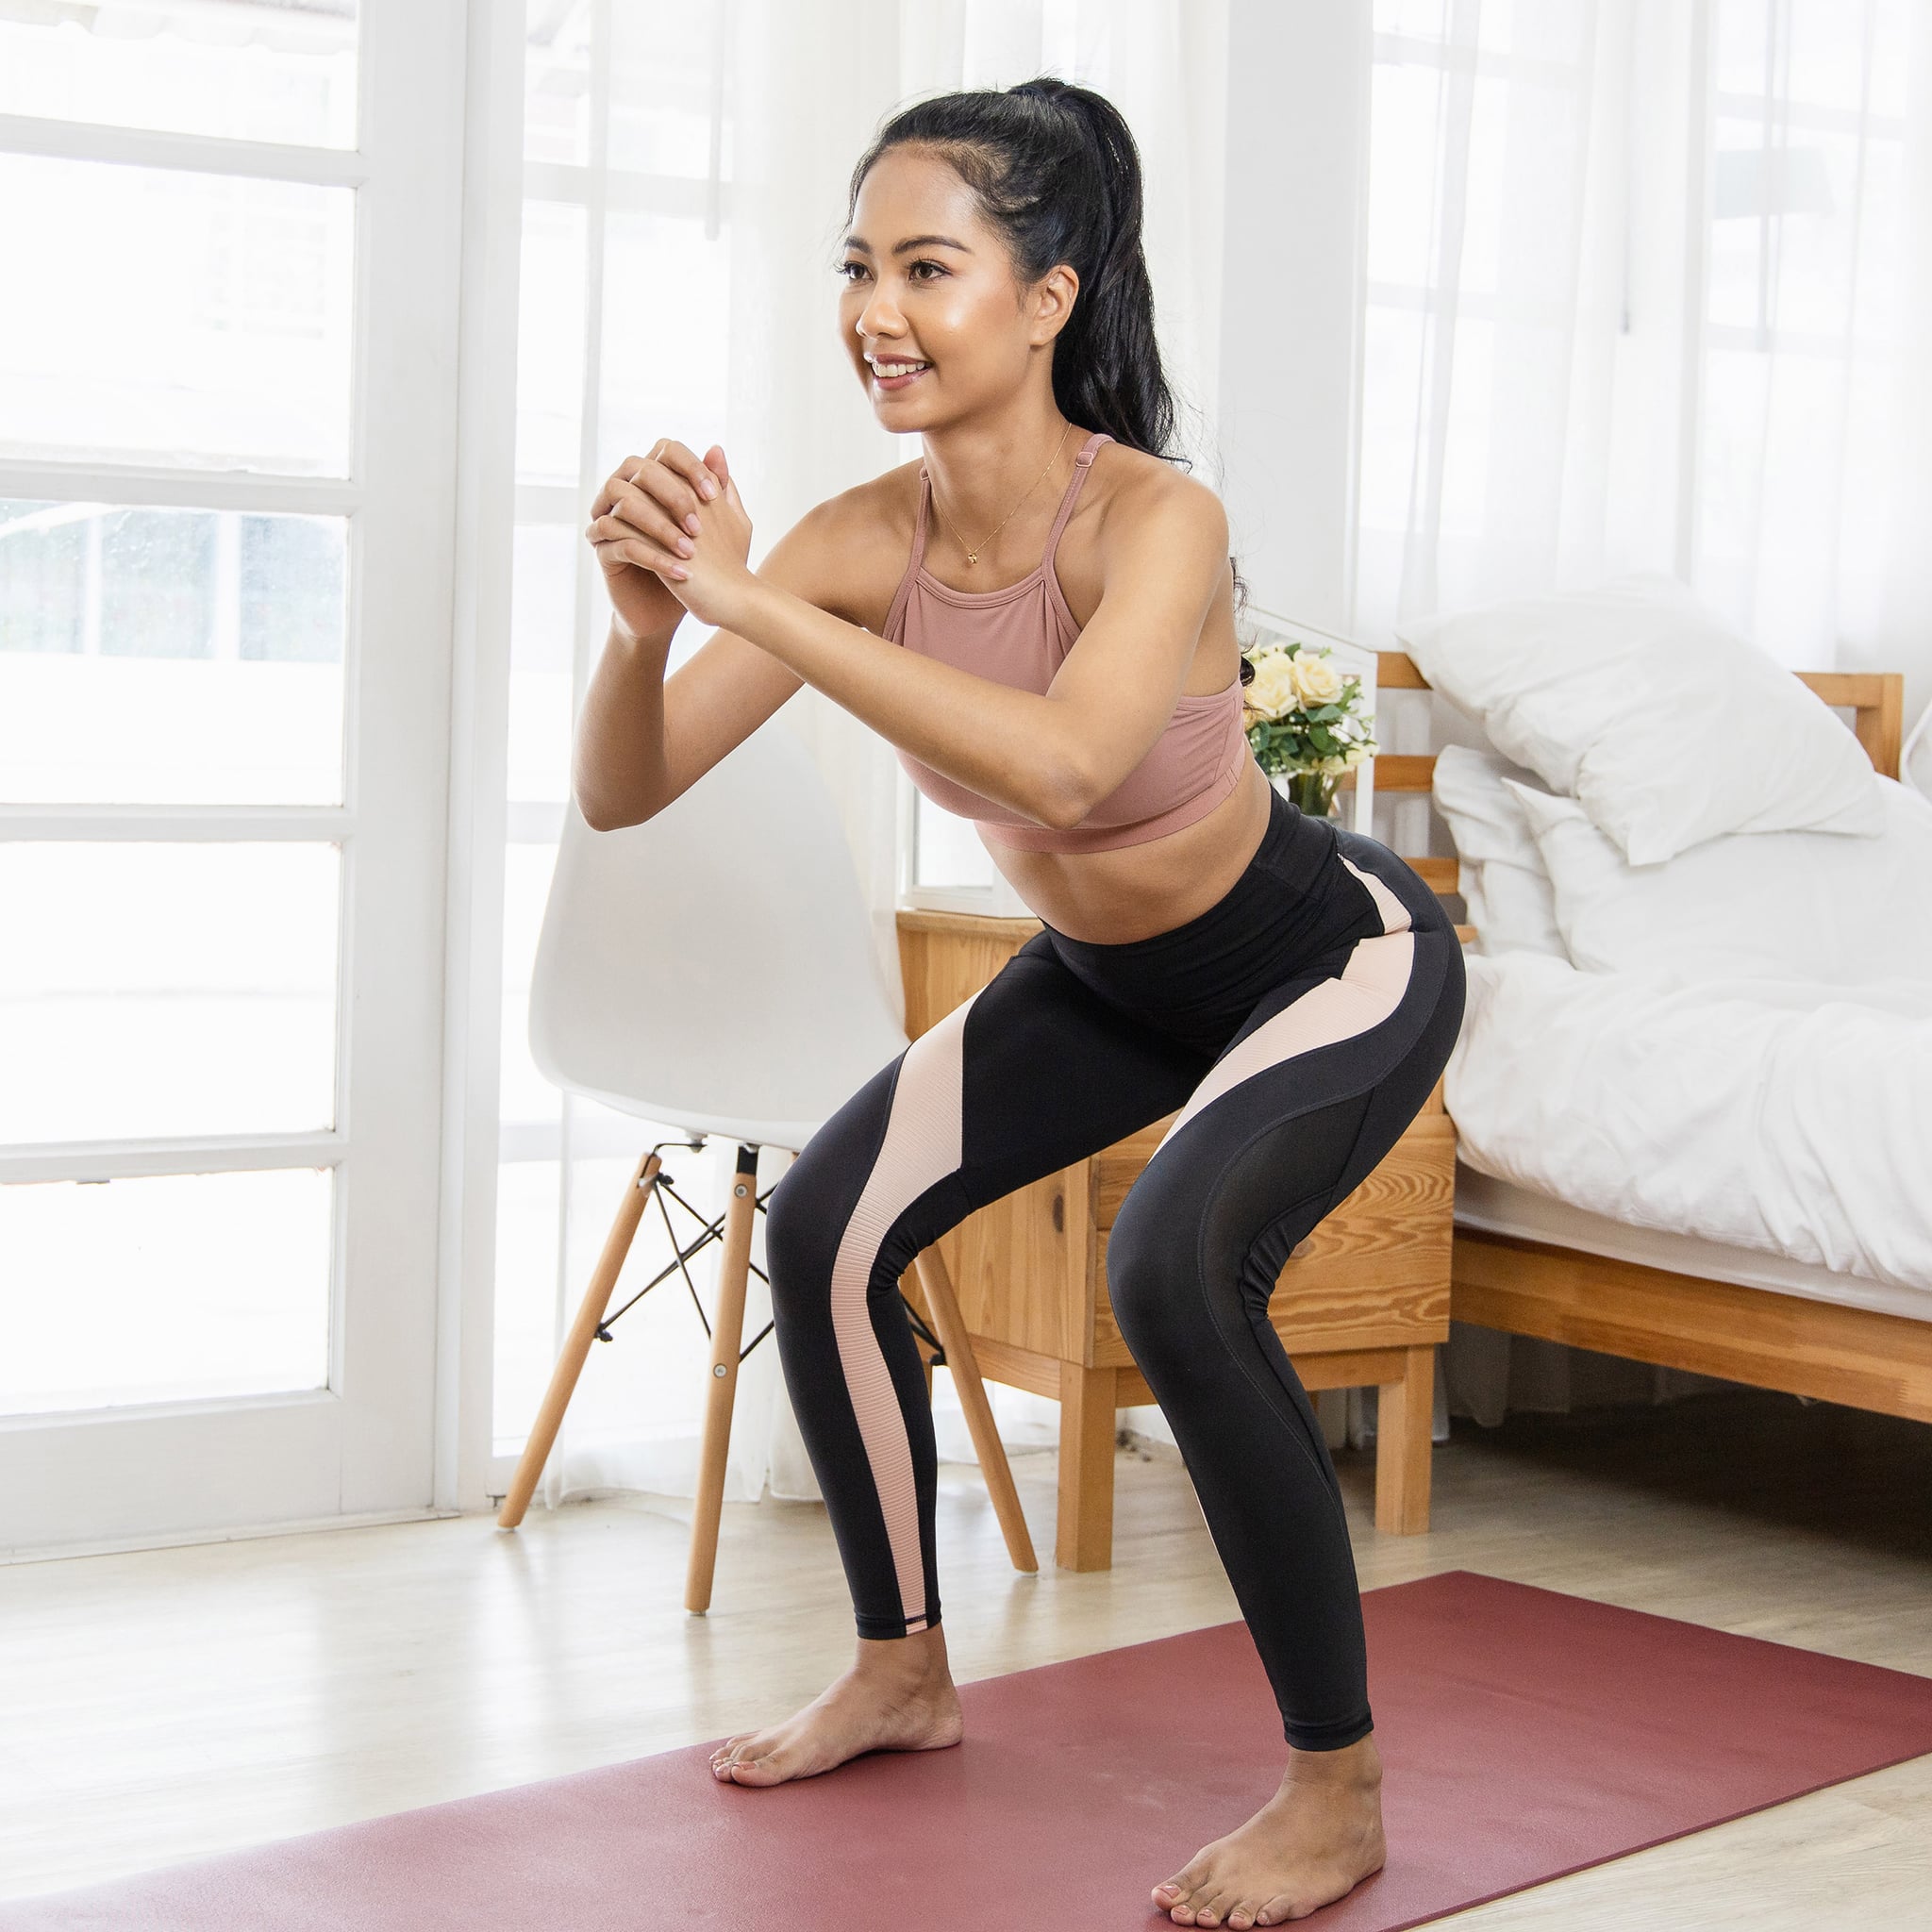 Learn Malasana | Yoga Squat for Calm and Strength